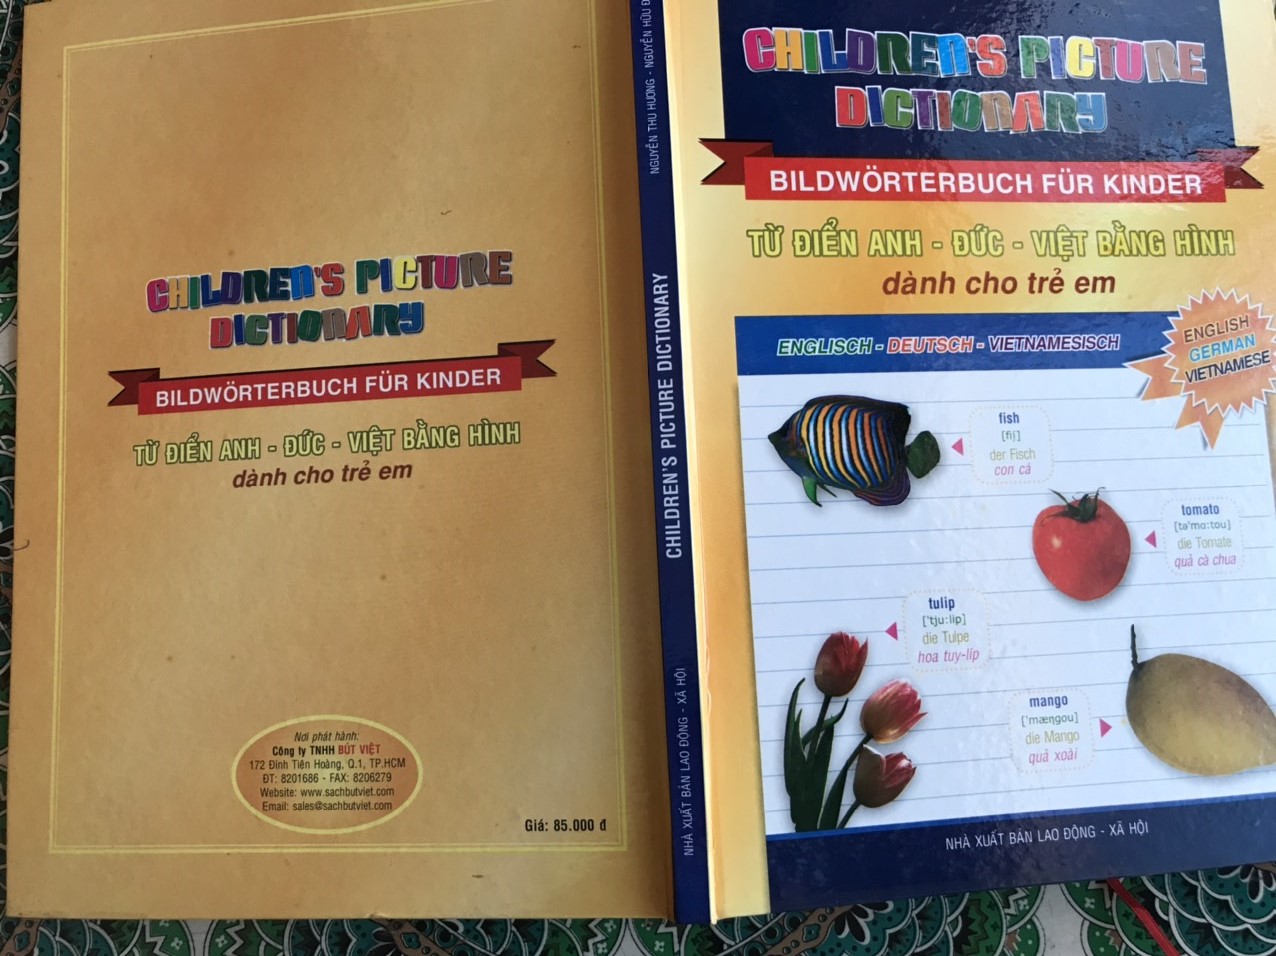 Từ Điển Anh - Đức - Việt Bằng Hình Dành Cho Trẻ Em - Children's Picture Dictionary (English - German - Vietnamese) - Bildwörterbuch Für Kinder (Englisch - Deutsch - Vietnamesisch)